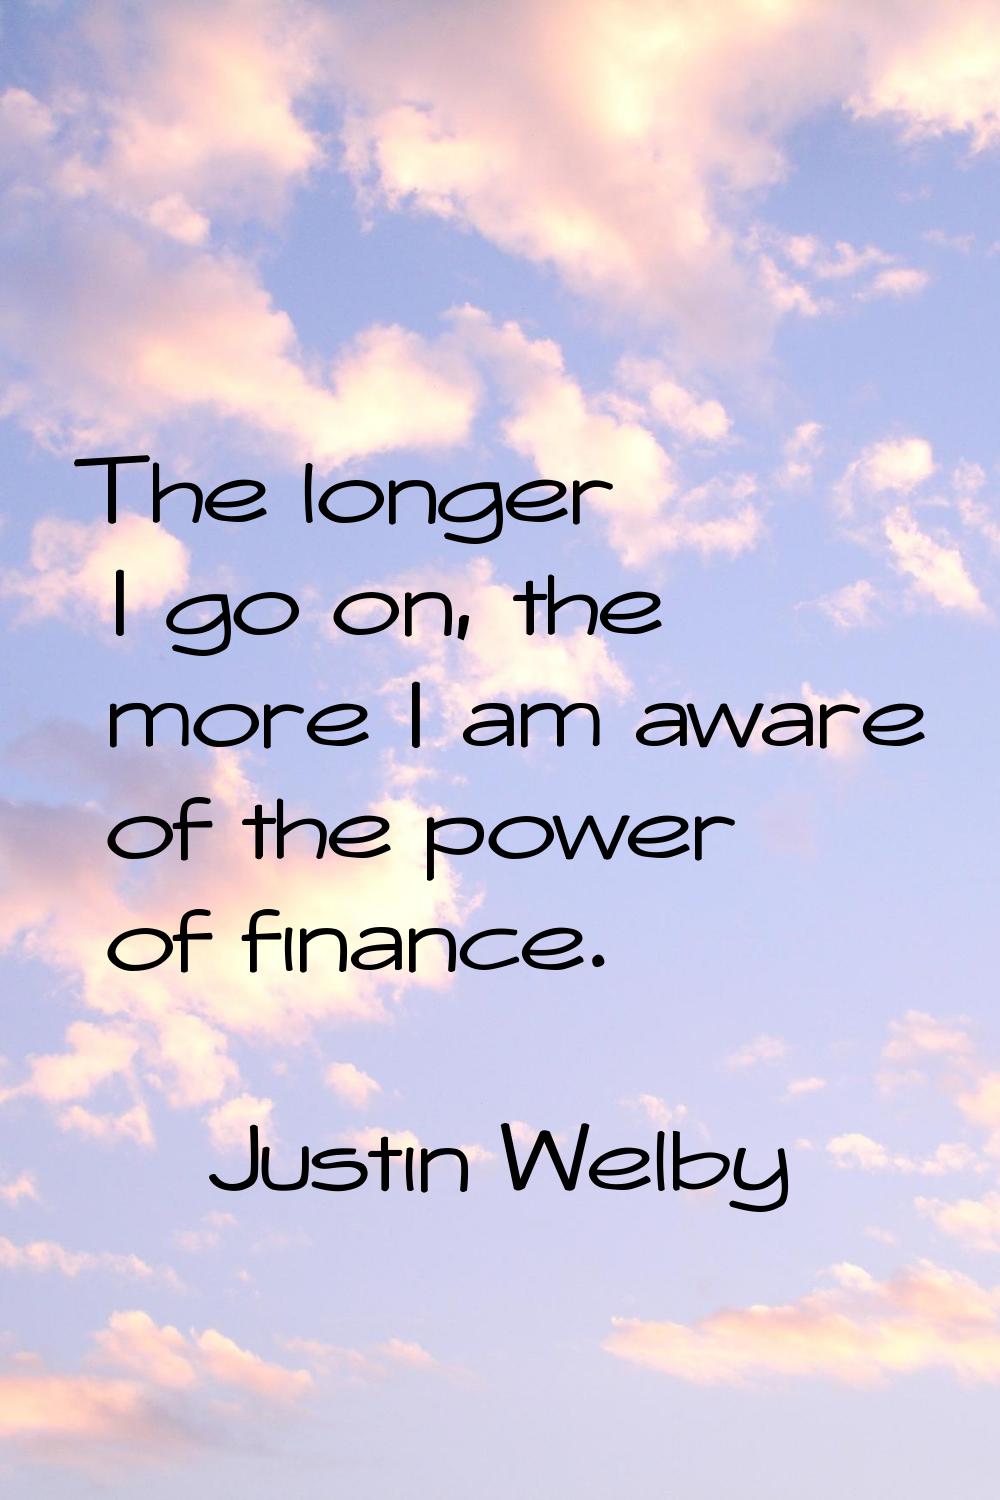 The longer I go on, the more I am aware of the power of finance.